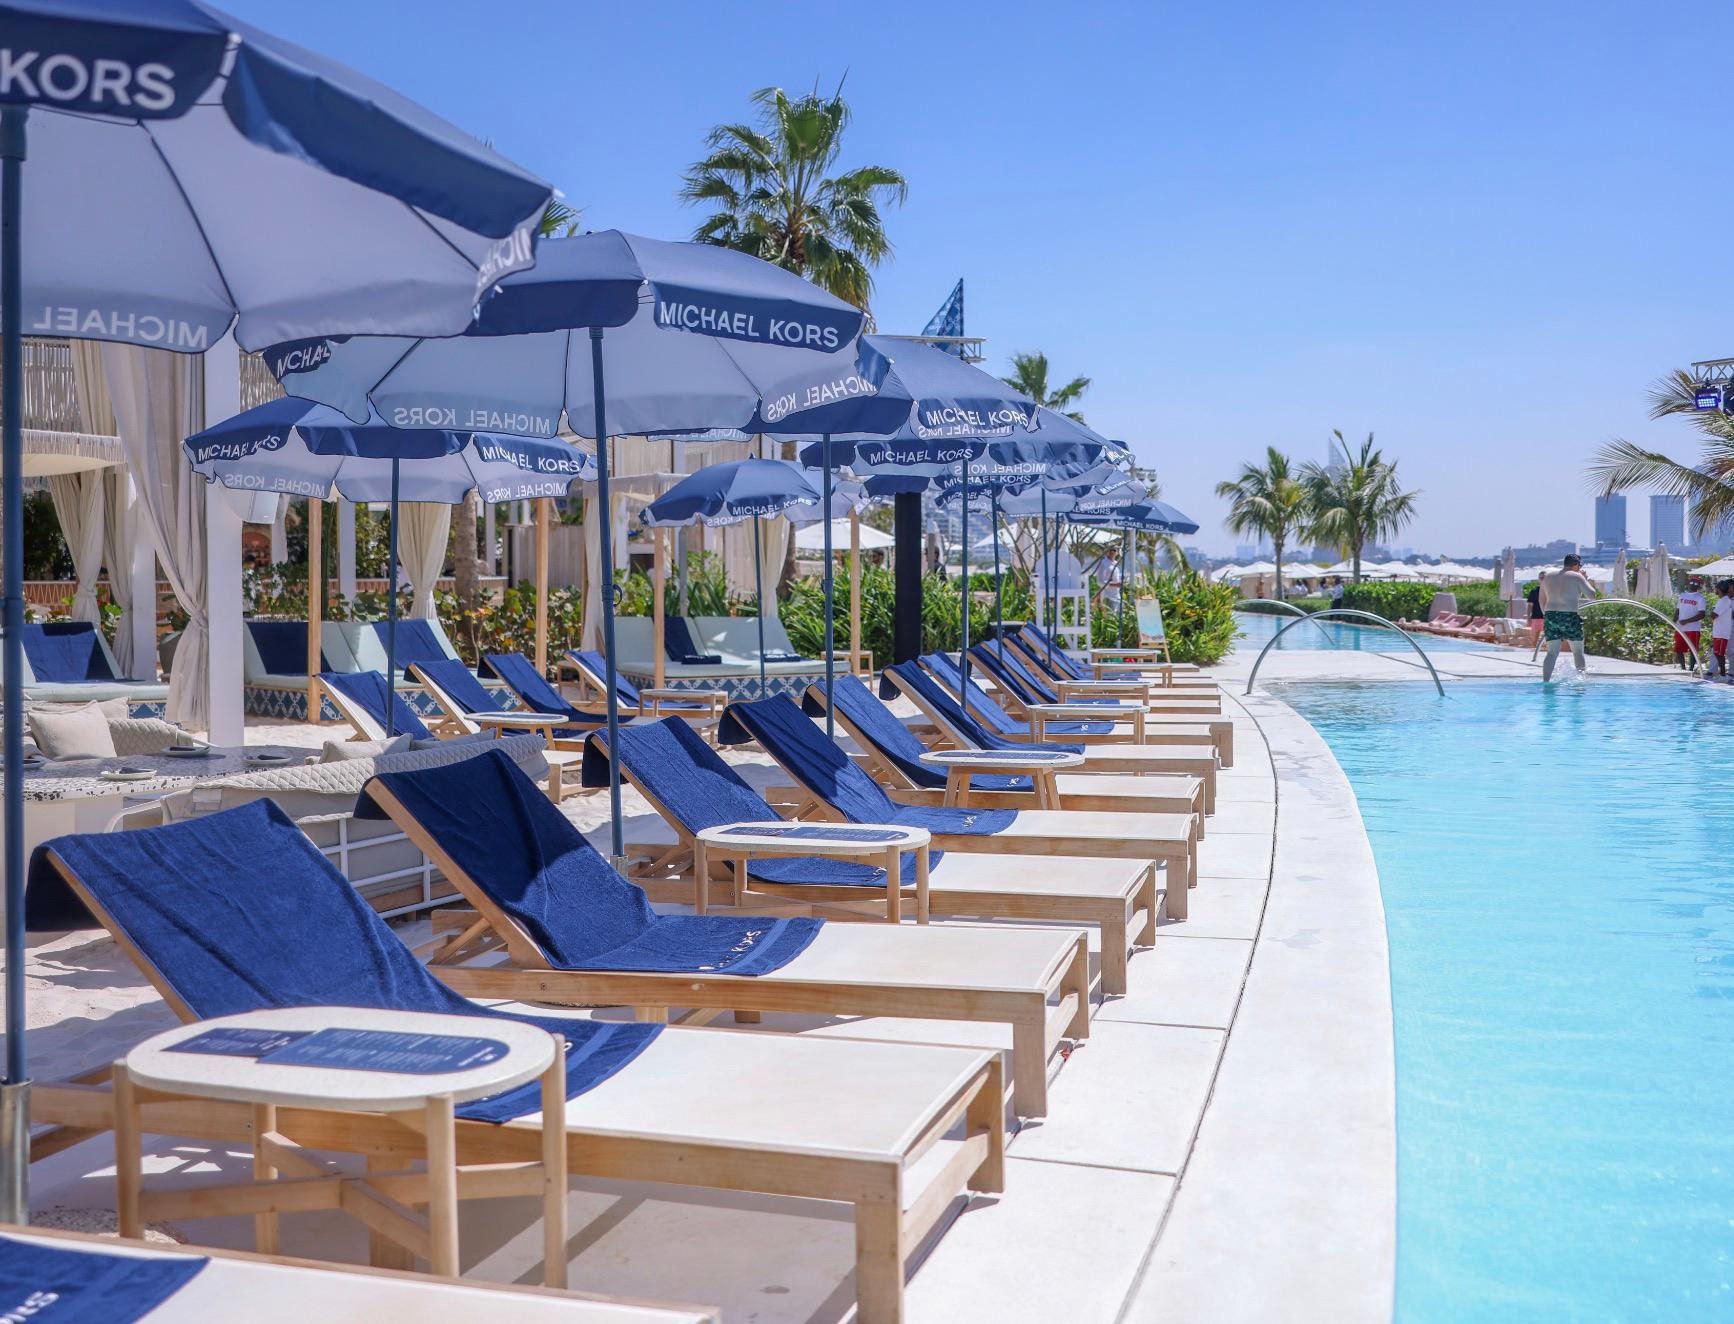 Michael Kors Beach Club takes over The 305 in Dubai  